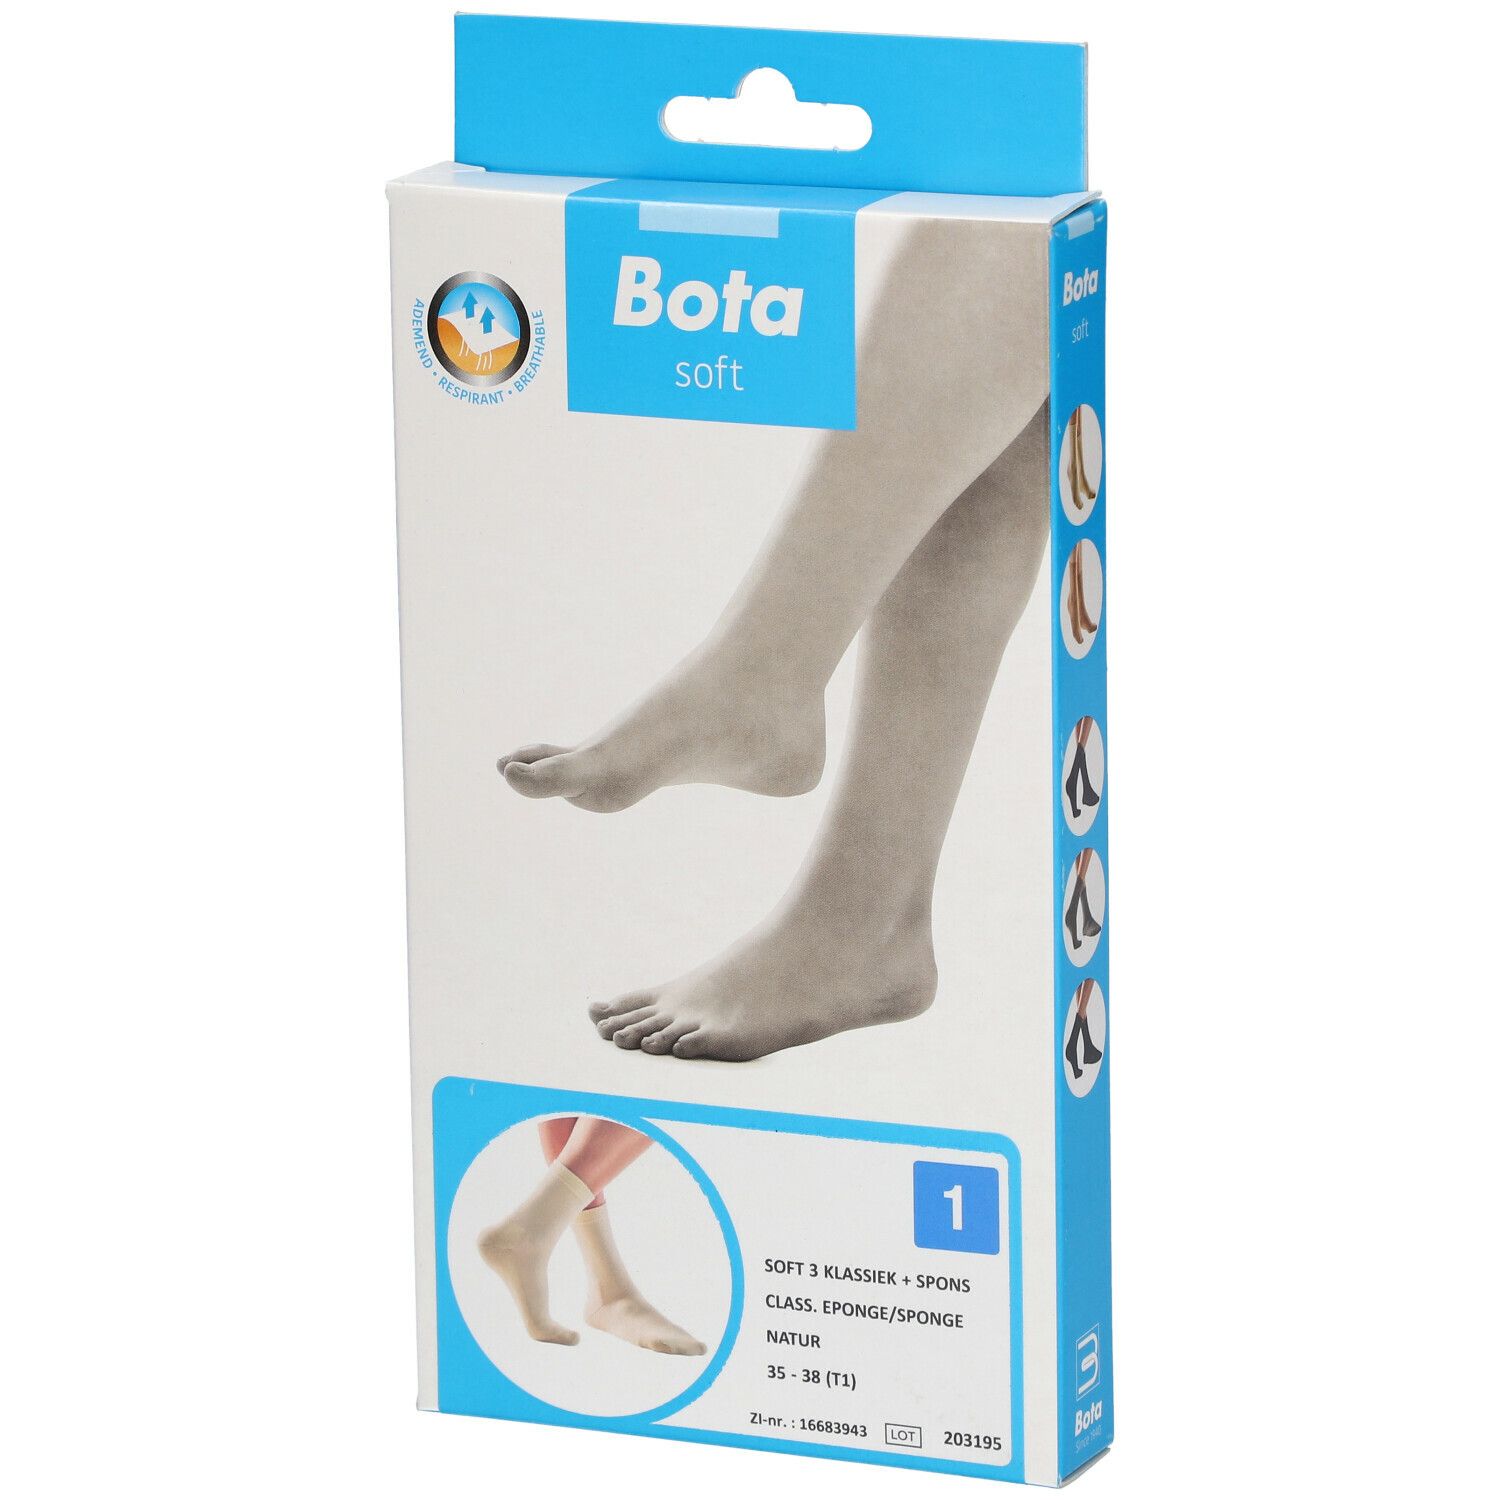 Bota Soft 2 Classique avec tissu éponge Natur Taille 2